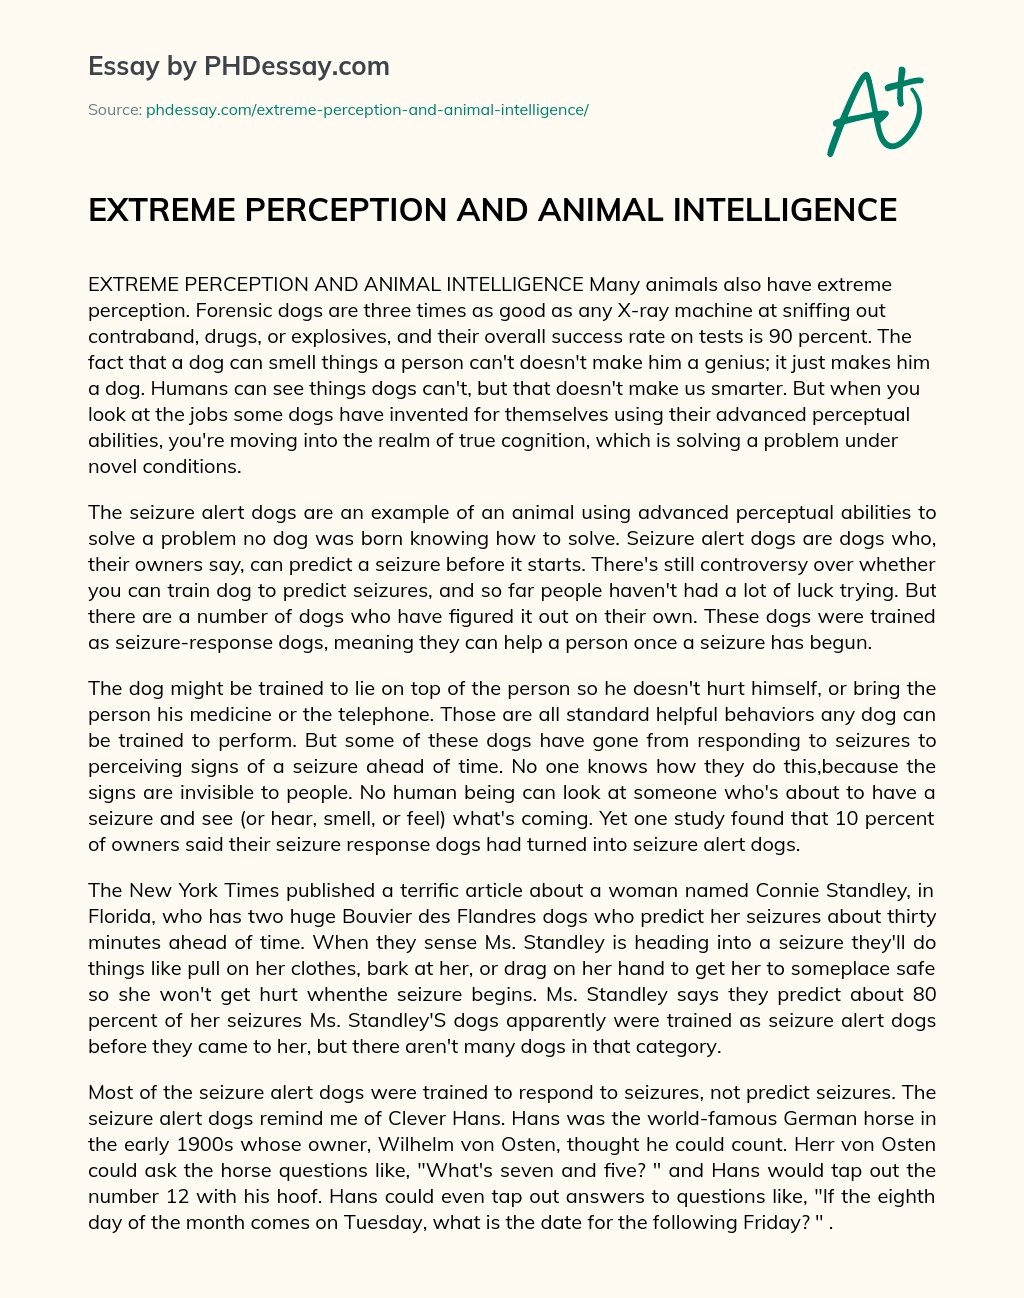 animal intelligence essay